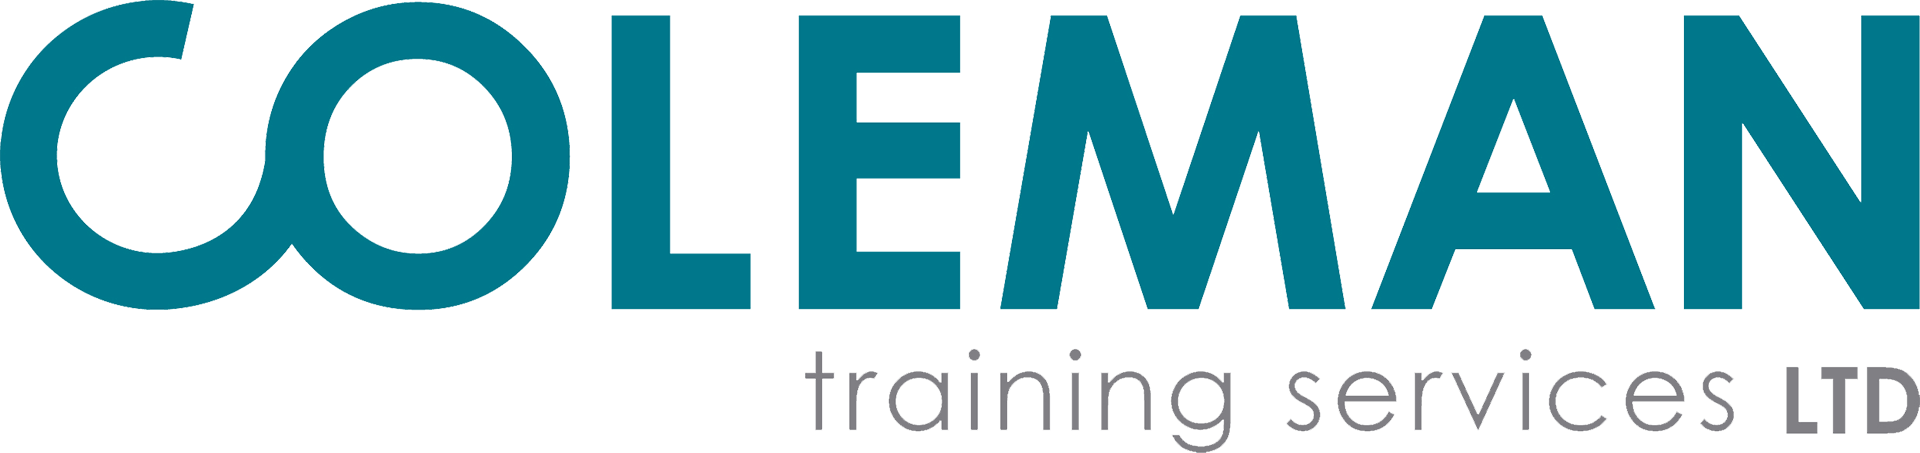 coleman training services ltd logo